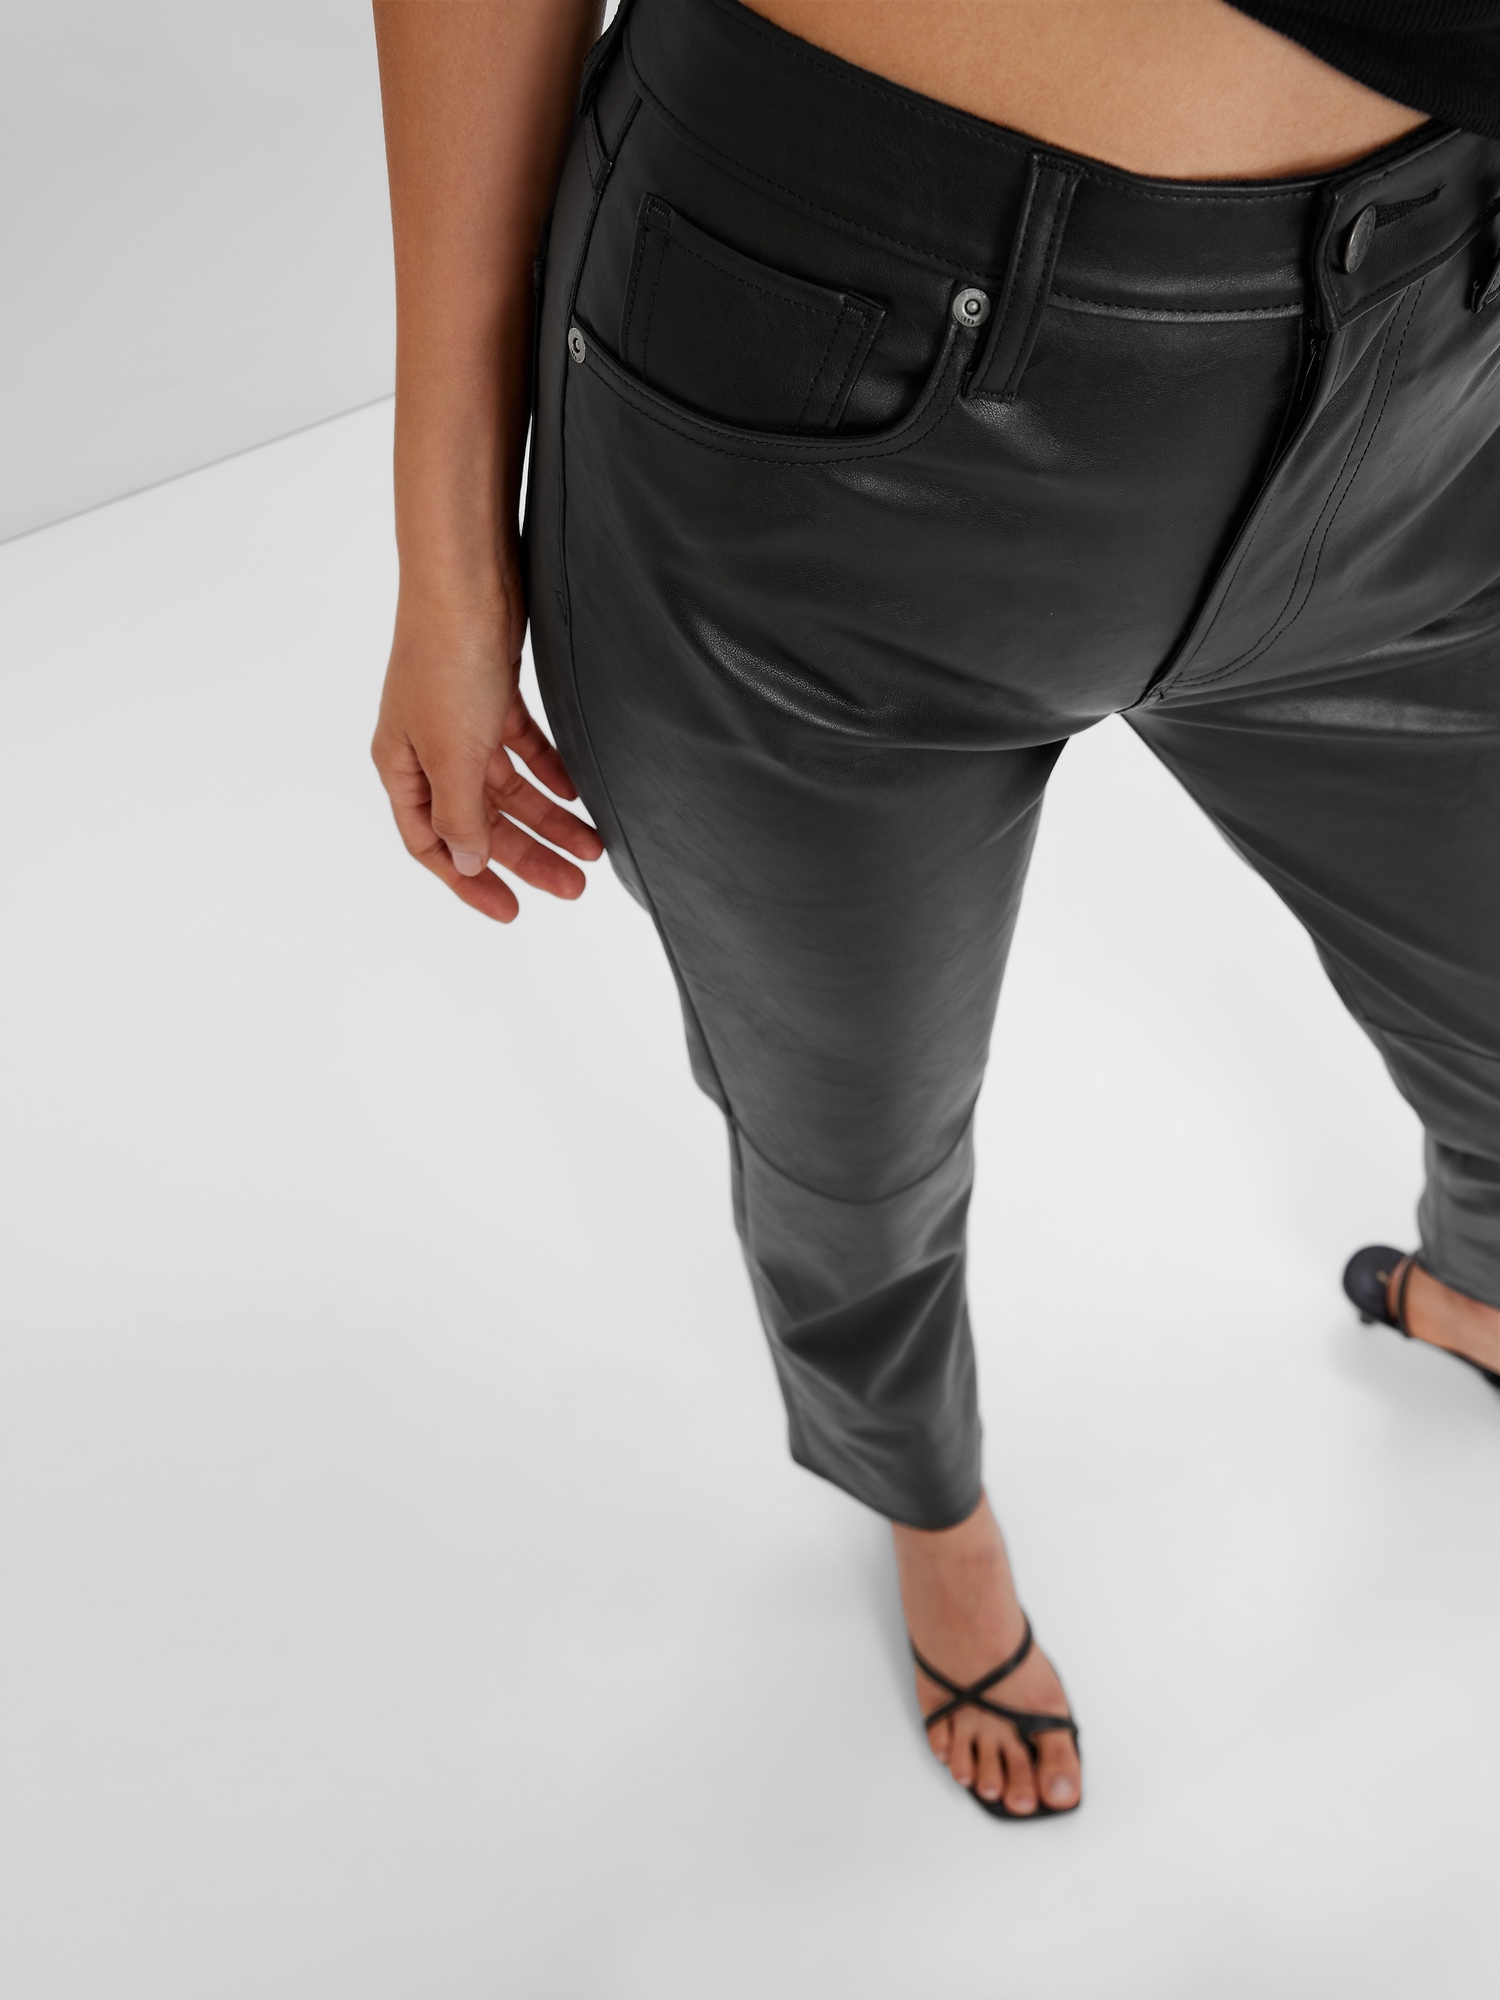 Best Deal for Voghtic Women's Elastic Waist Faux Leather Pants Wide Leg